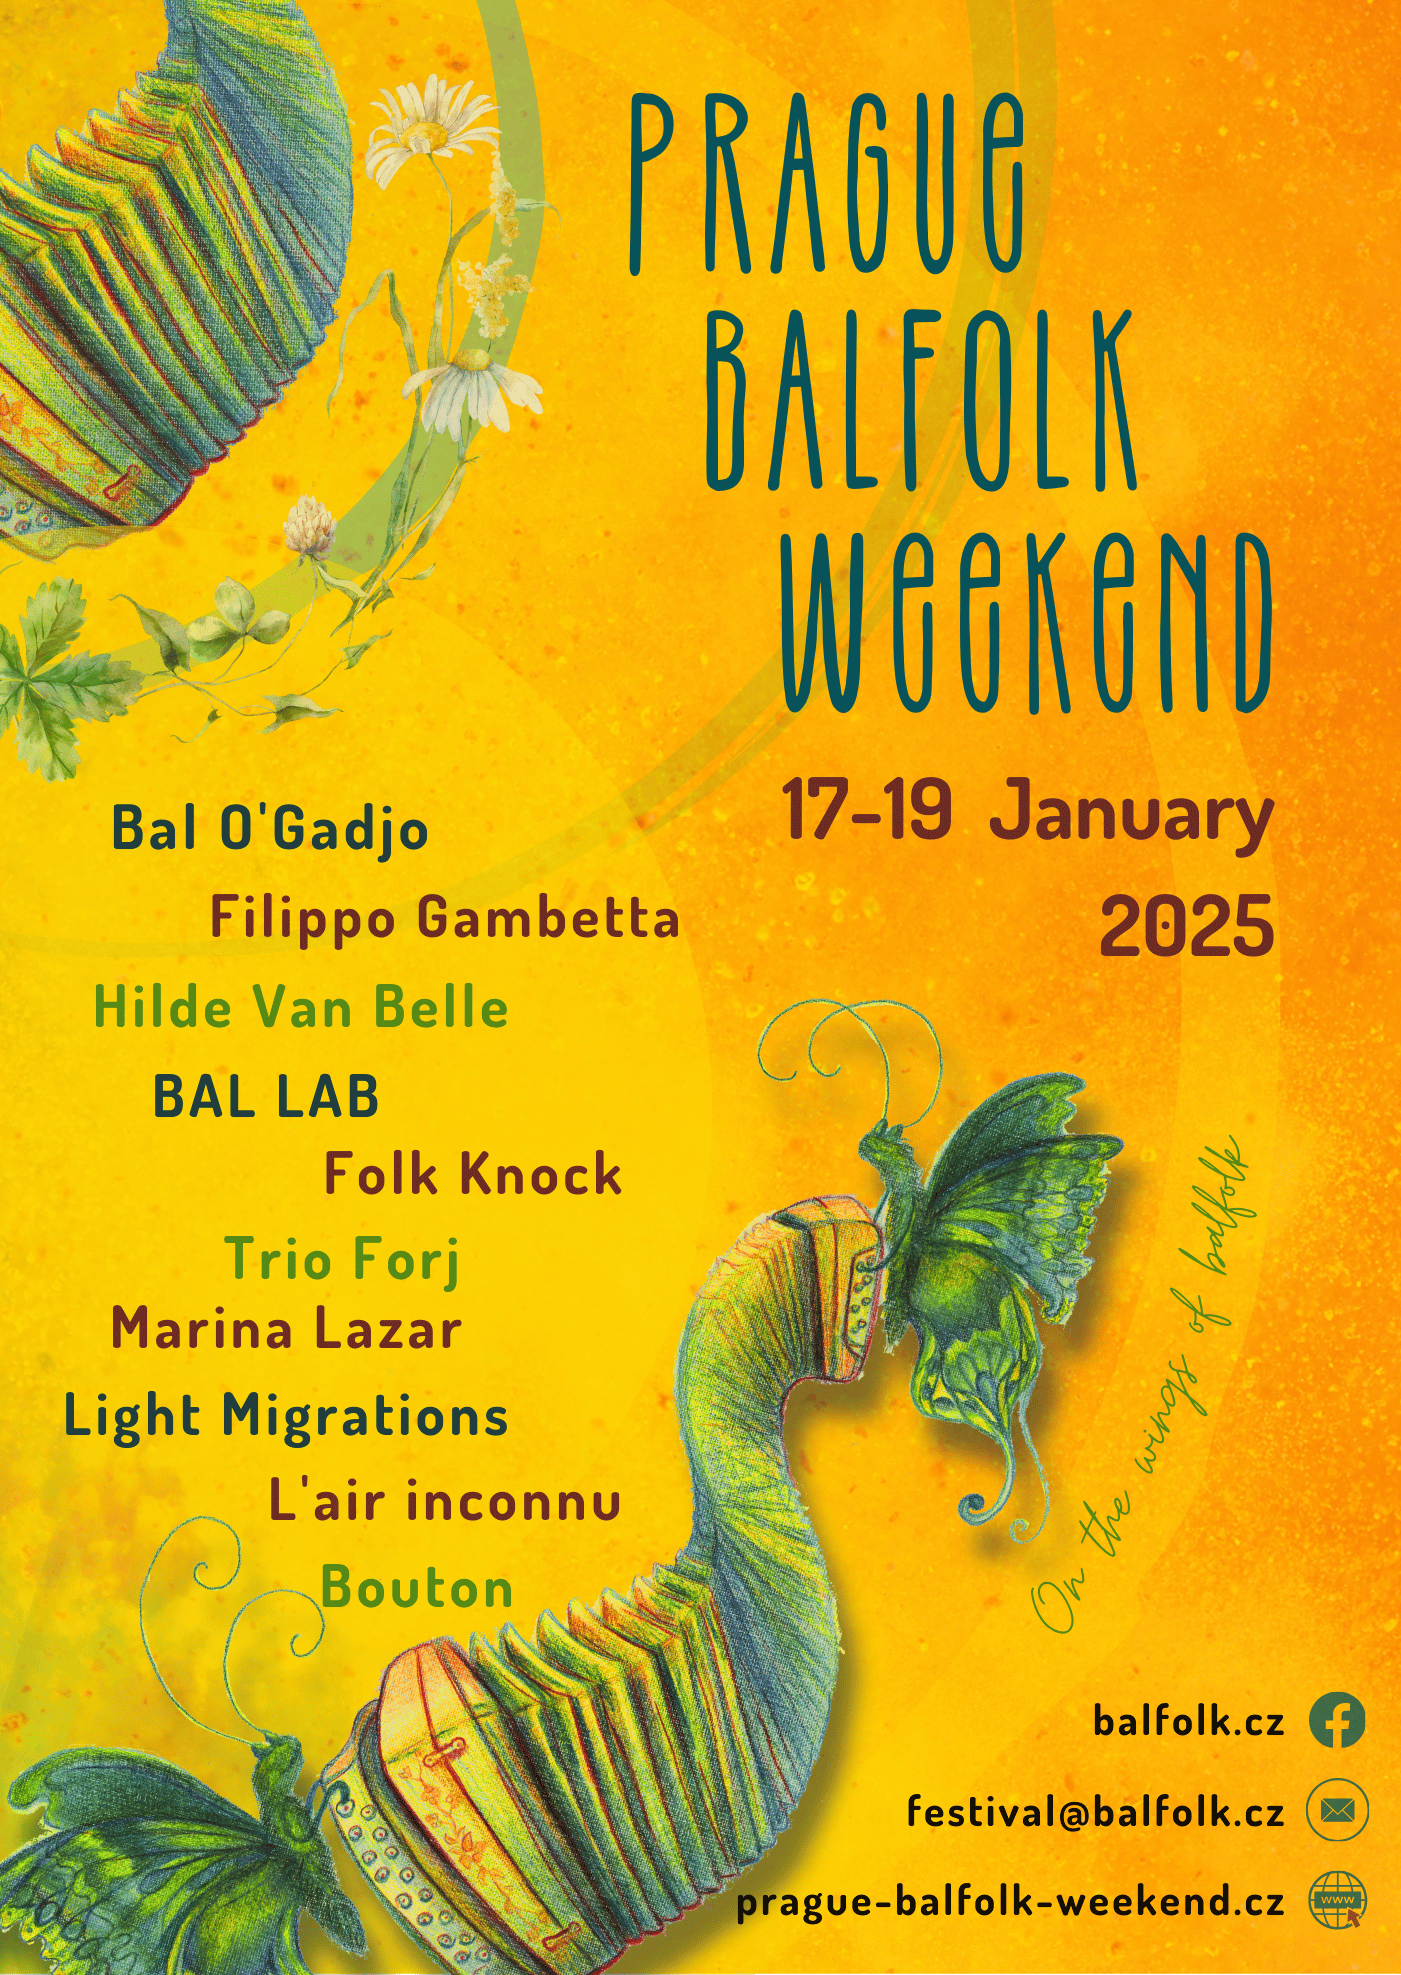 Prague Balfolk Weekend 2025: 17-19 January